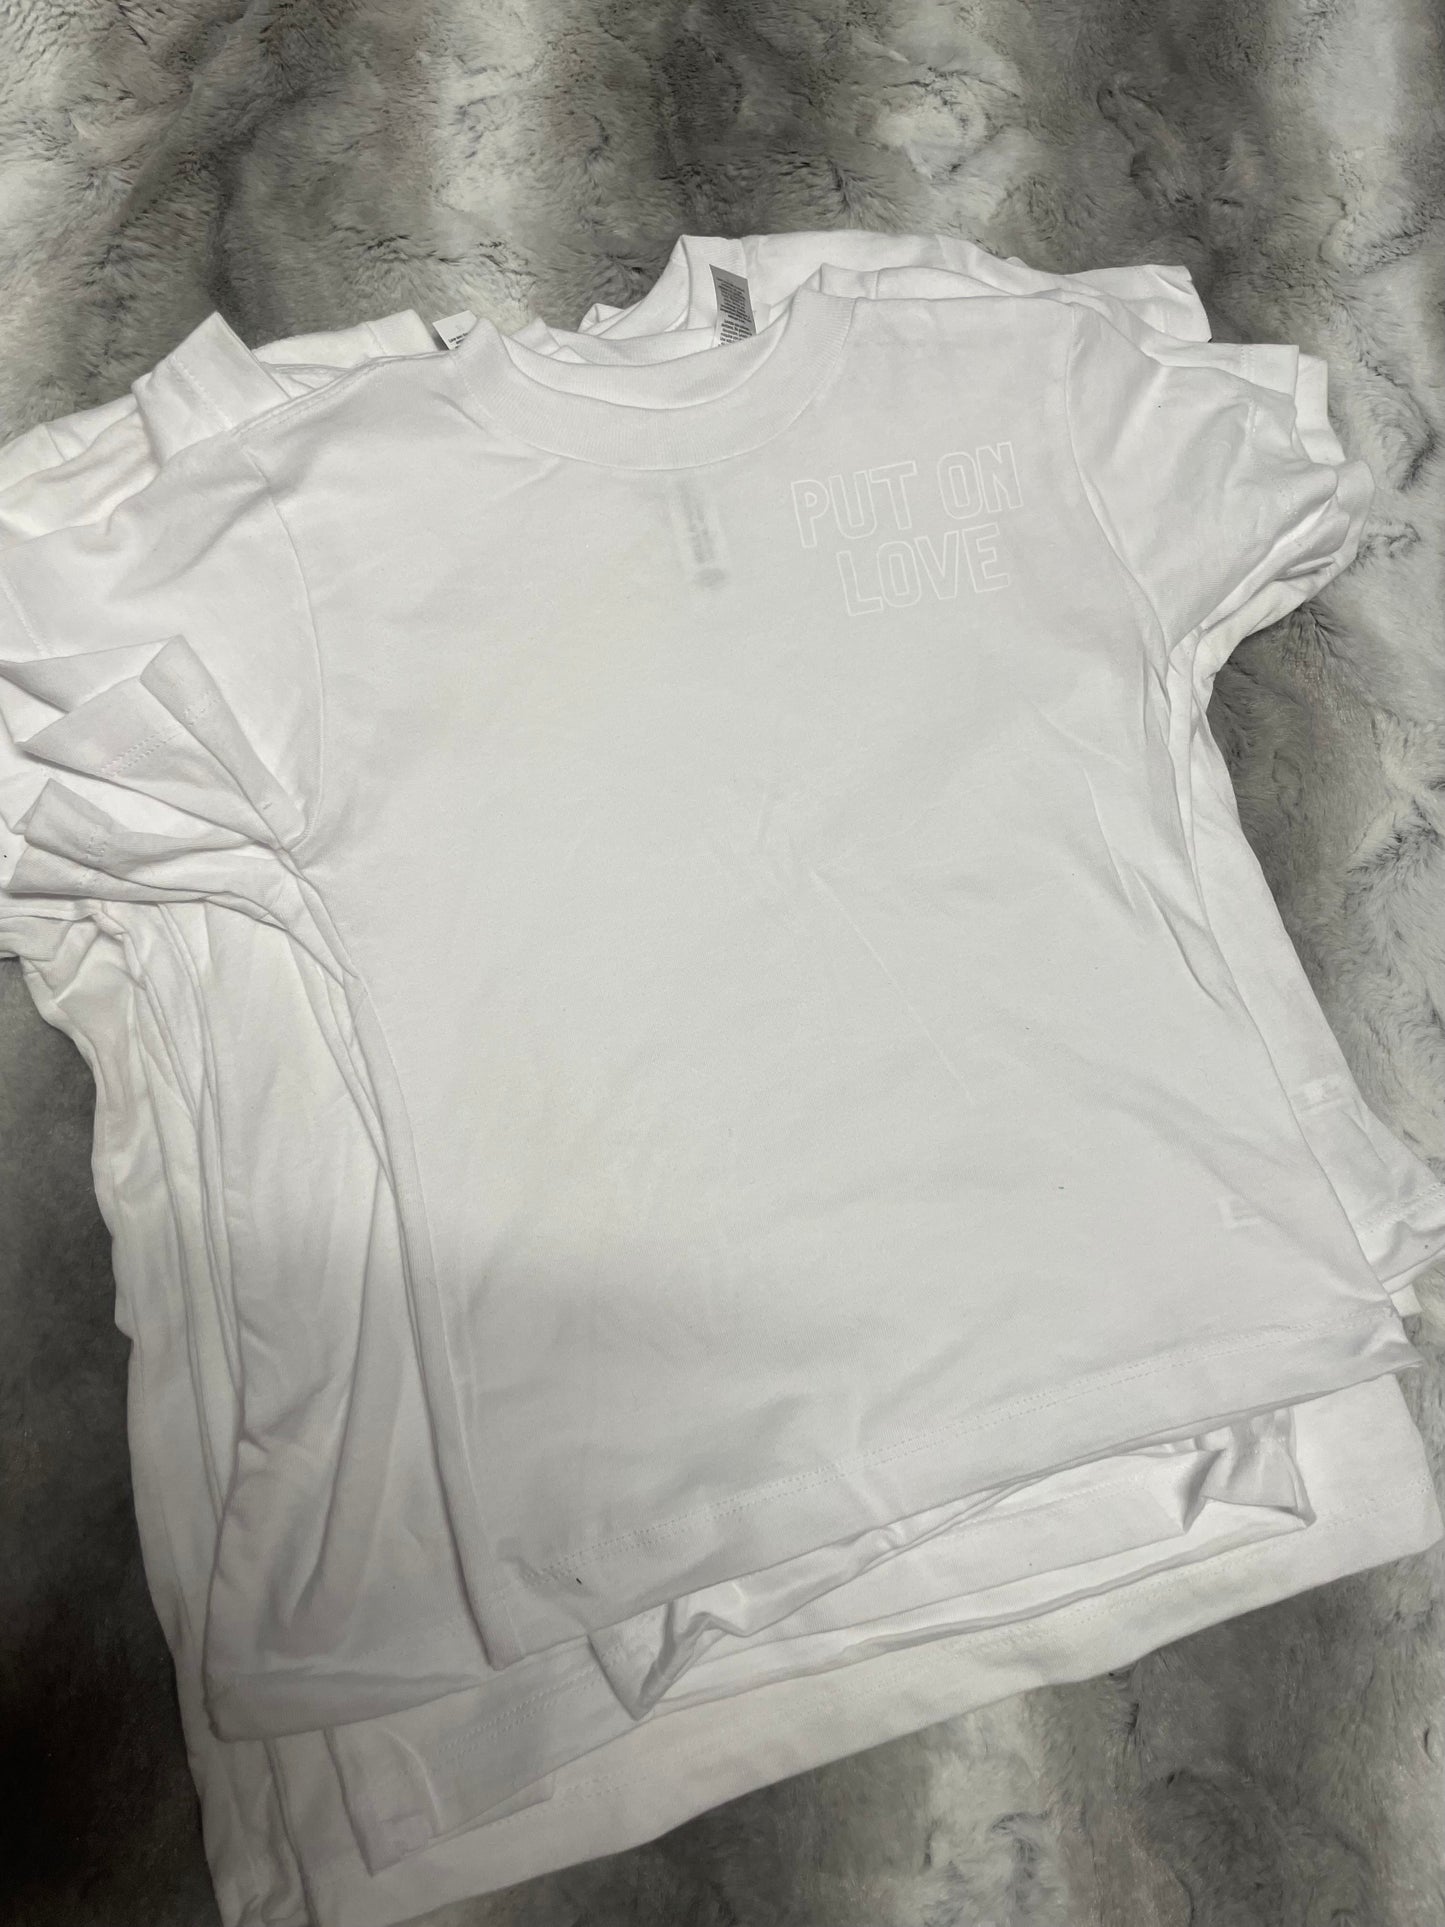 RTS Leftover Put on Love T-shirt-WHITE